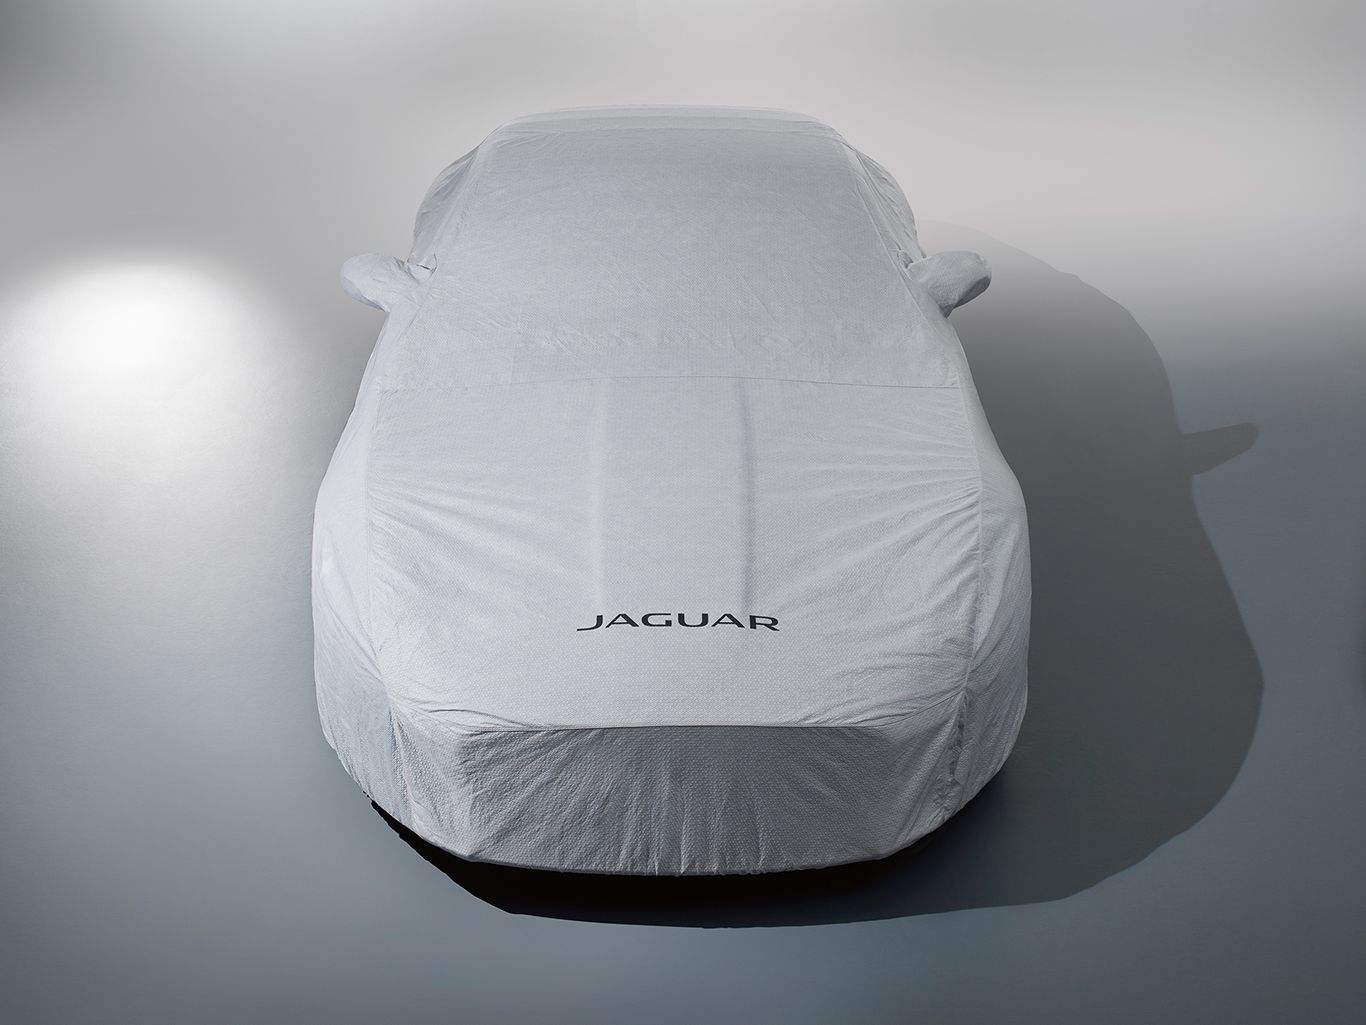 Jaguar S-Type half car cover - Externresist® outdoor use